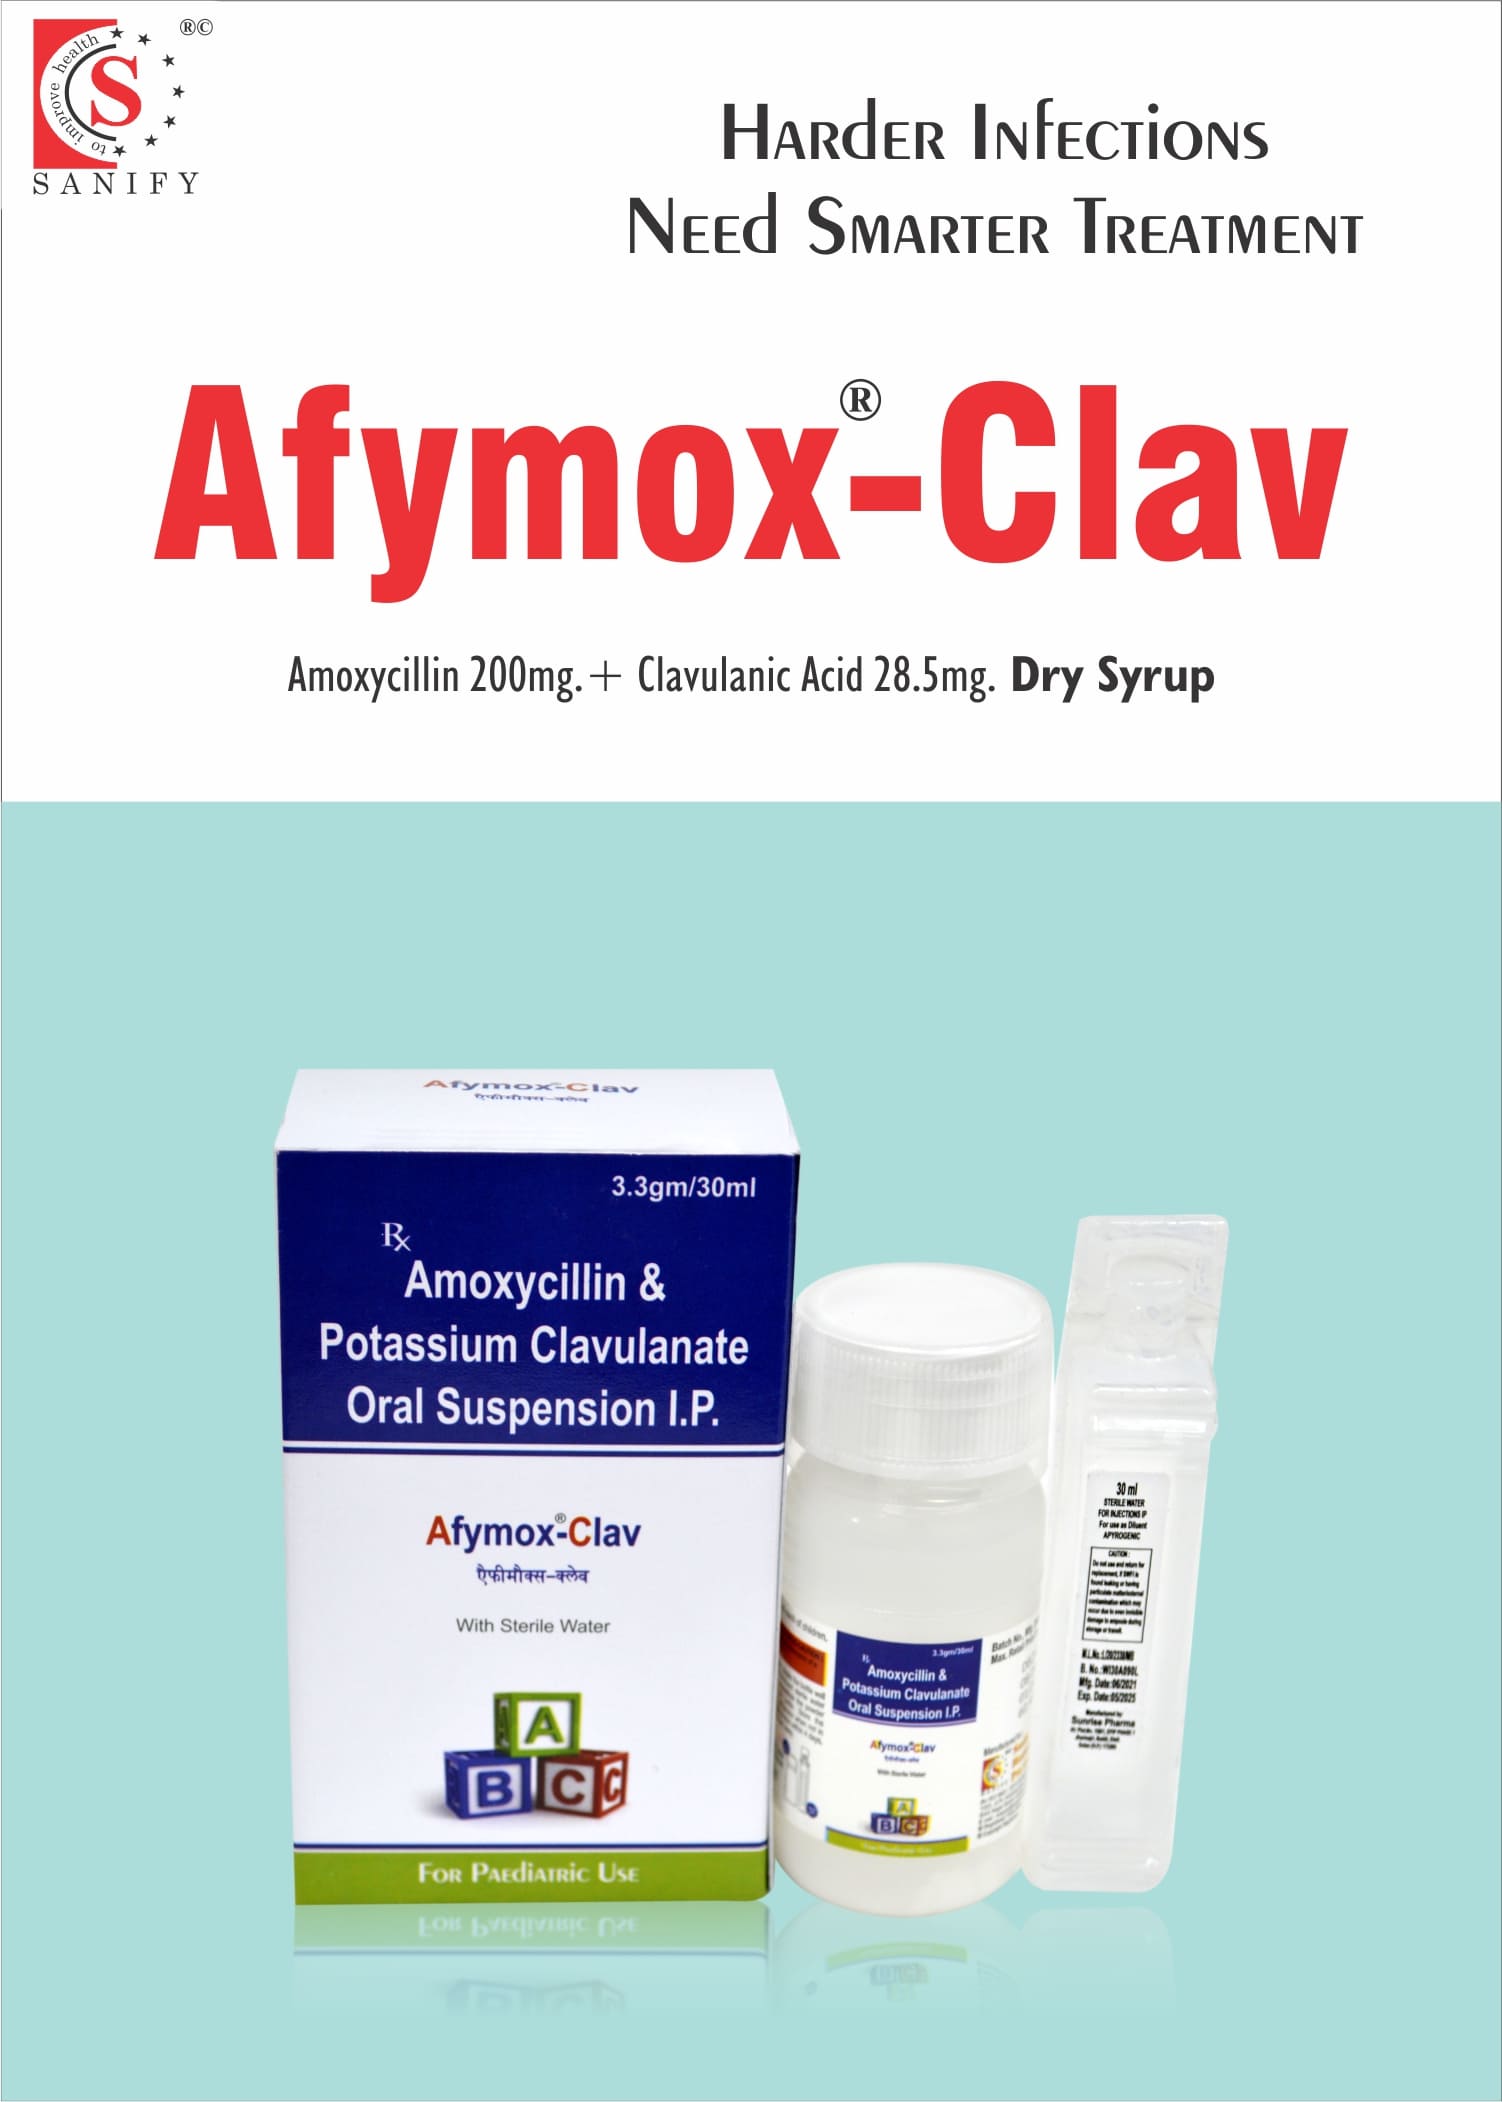 Amoxycillin 200mg + Clavulanic Acid 28.5mg/5ml